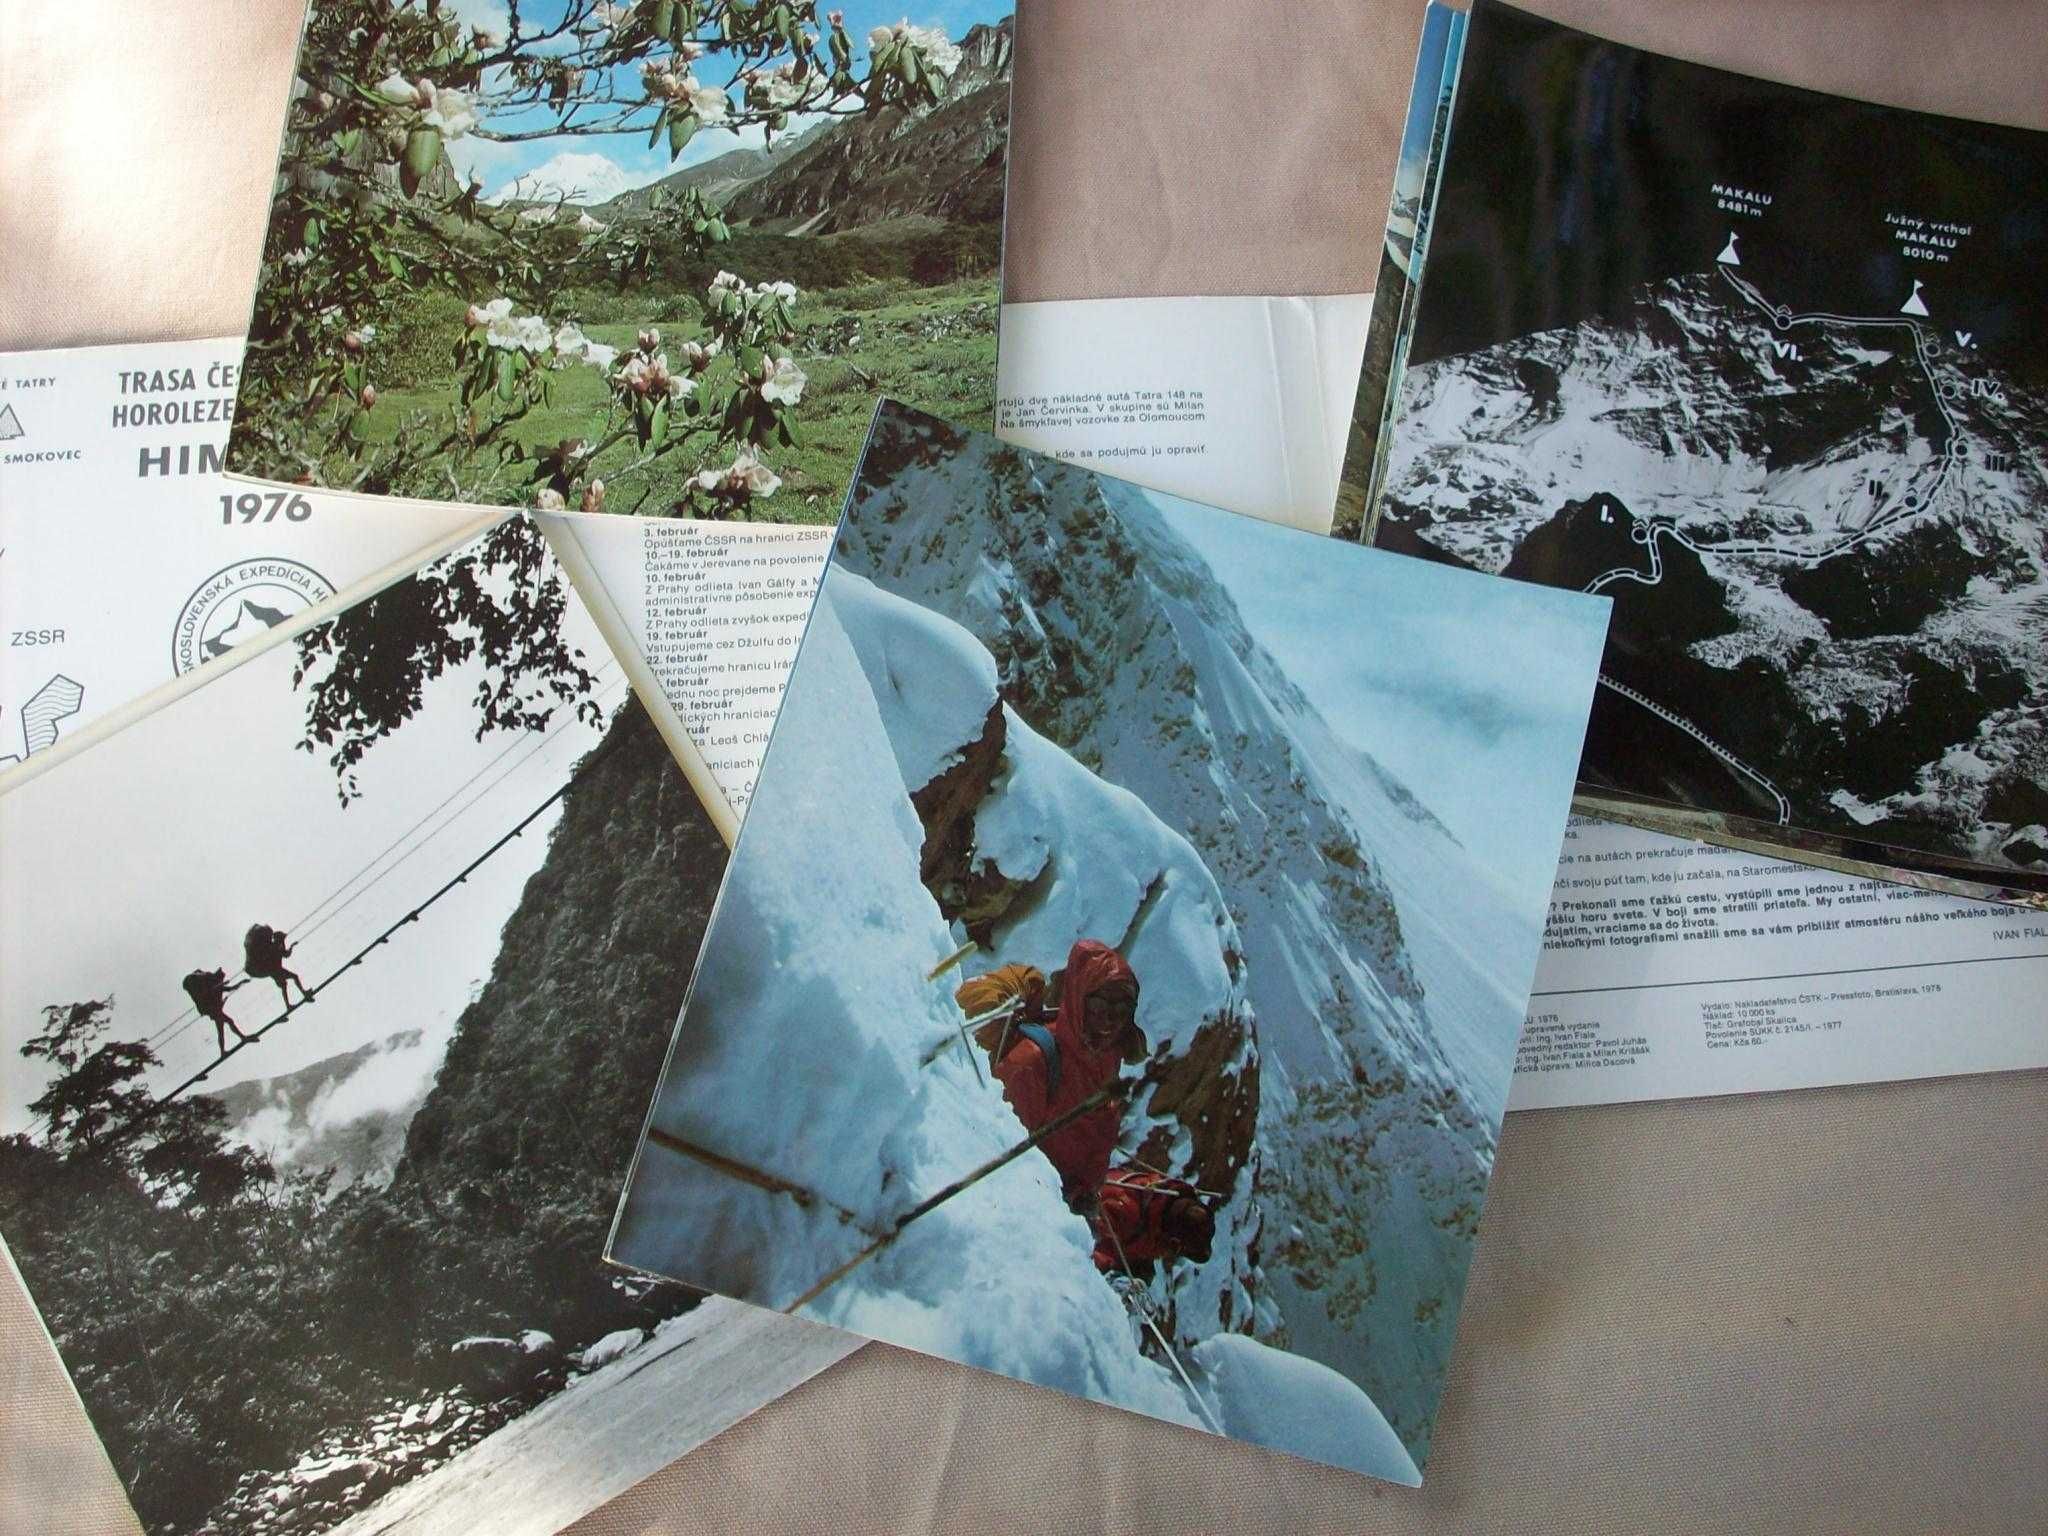 Hindukusz 1974 + Makalu 1976, 2 albumy fotografii.